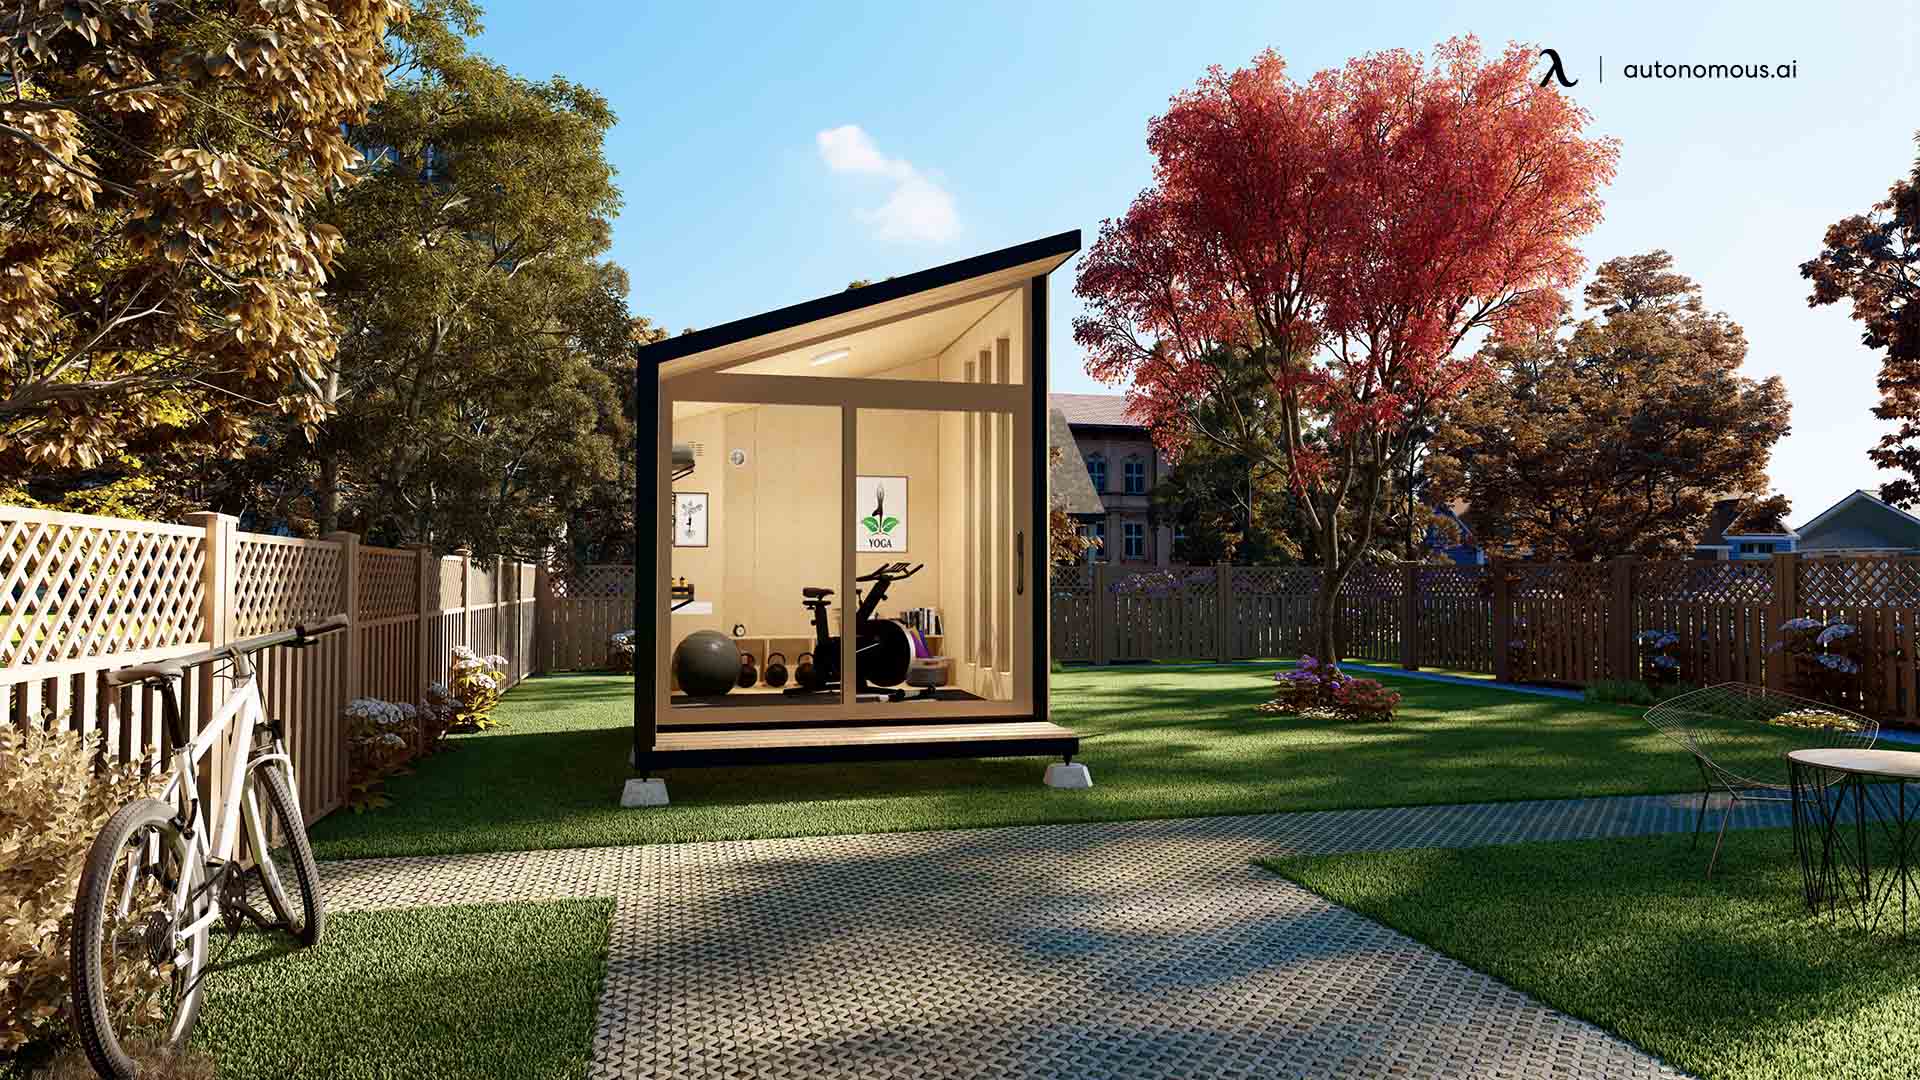 Autonomous GymPod luxury garden shed